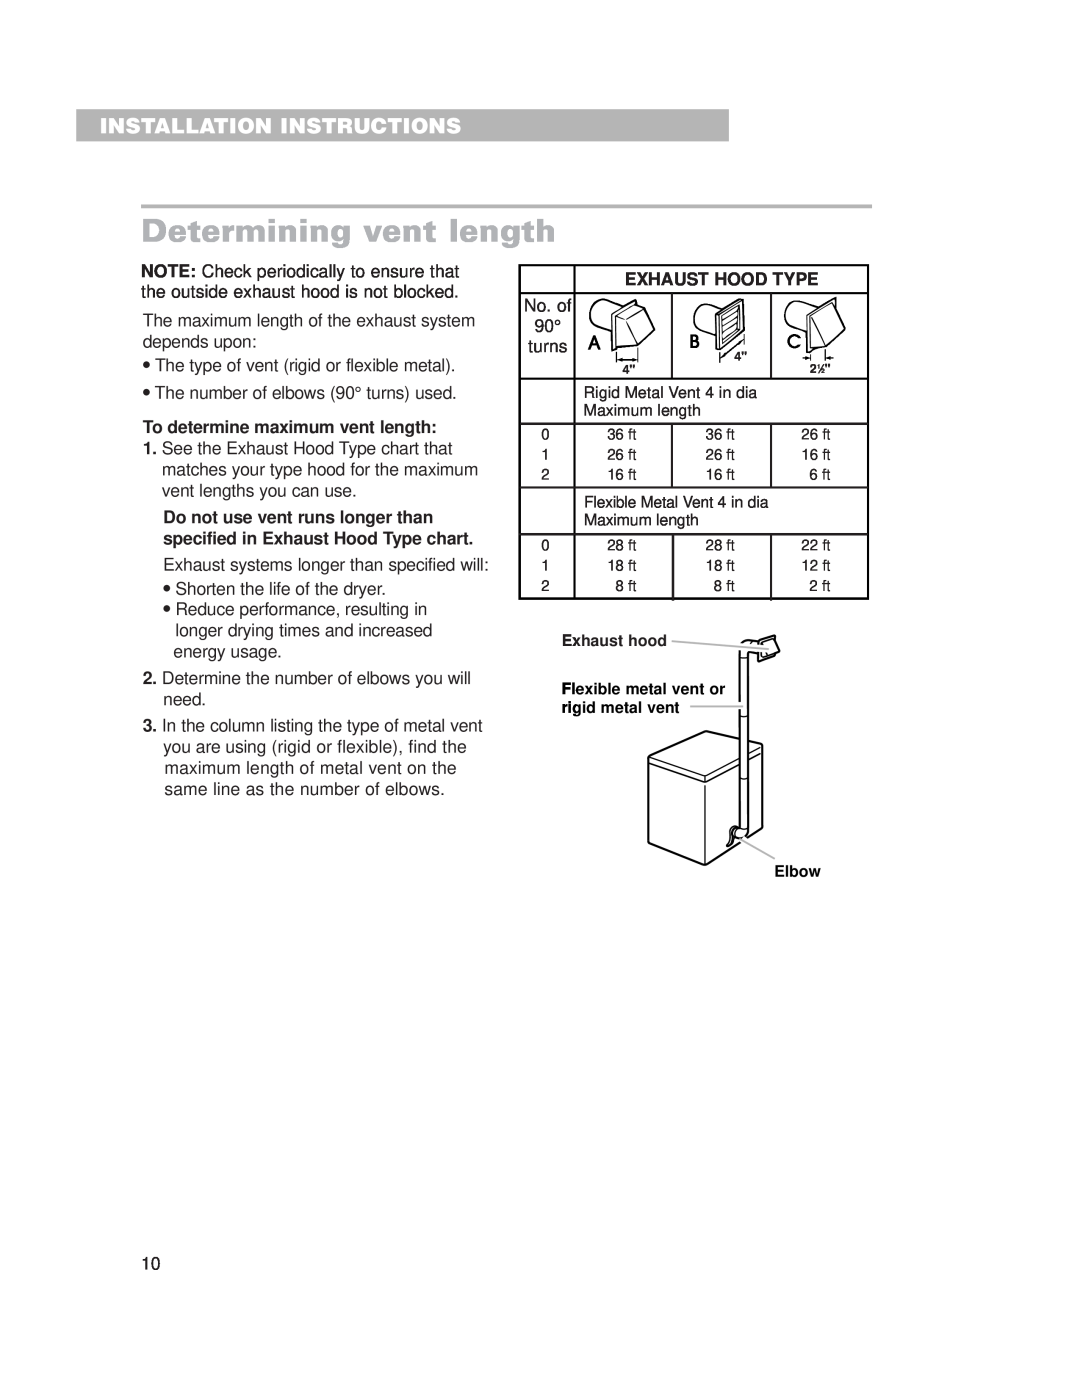 Whirlpool 3977631 Determining vent length, Installation Instructions, To determine maximum vent length, Exhaust Hood Type 